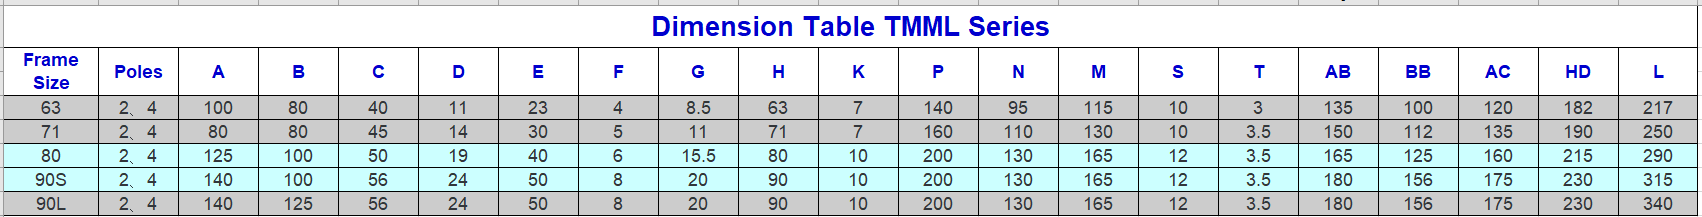 Dimension Table ΤΜΜL Series